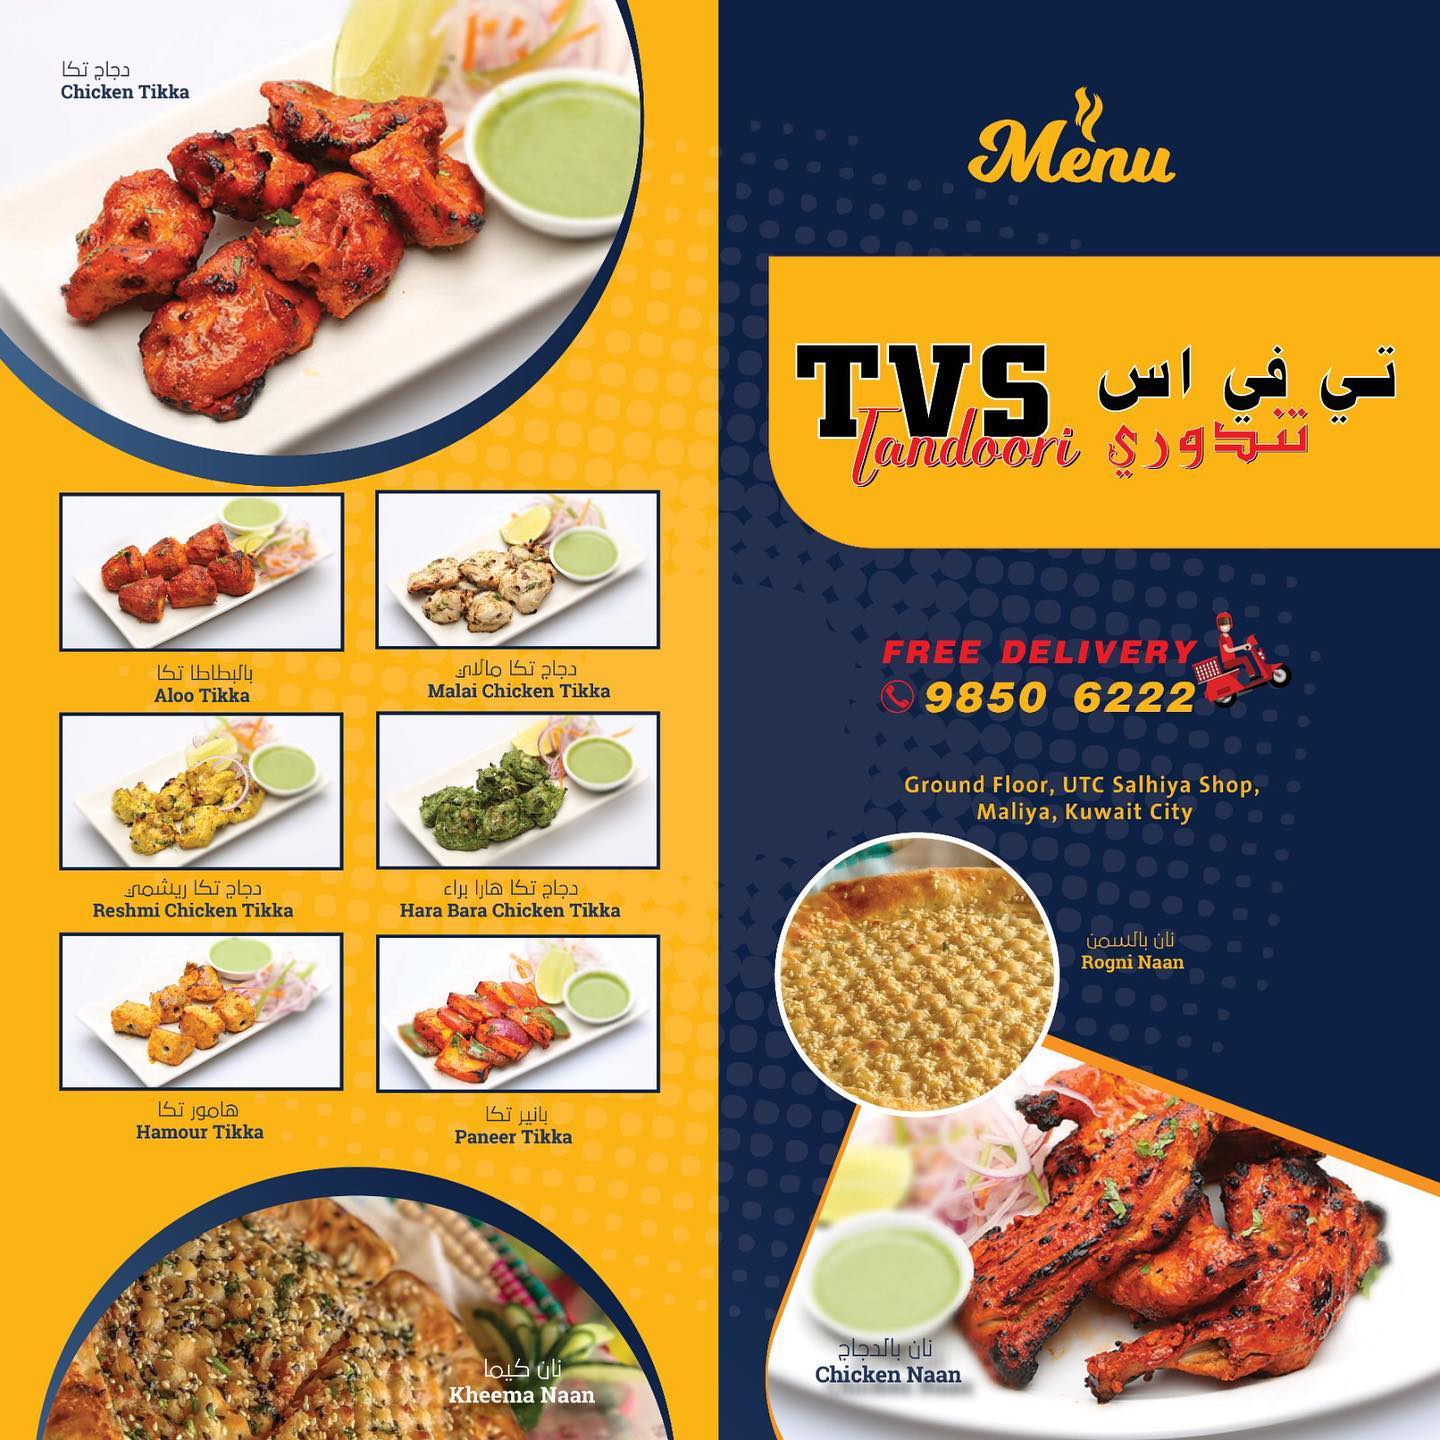 TVS Tandoori Indian Restaurant